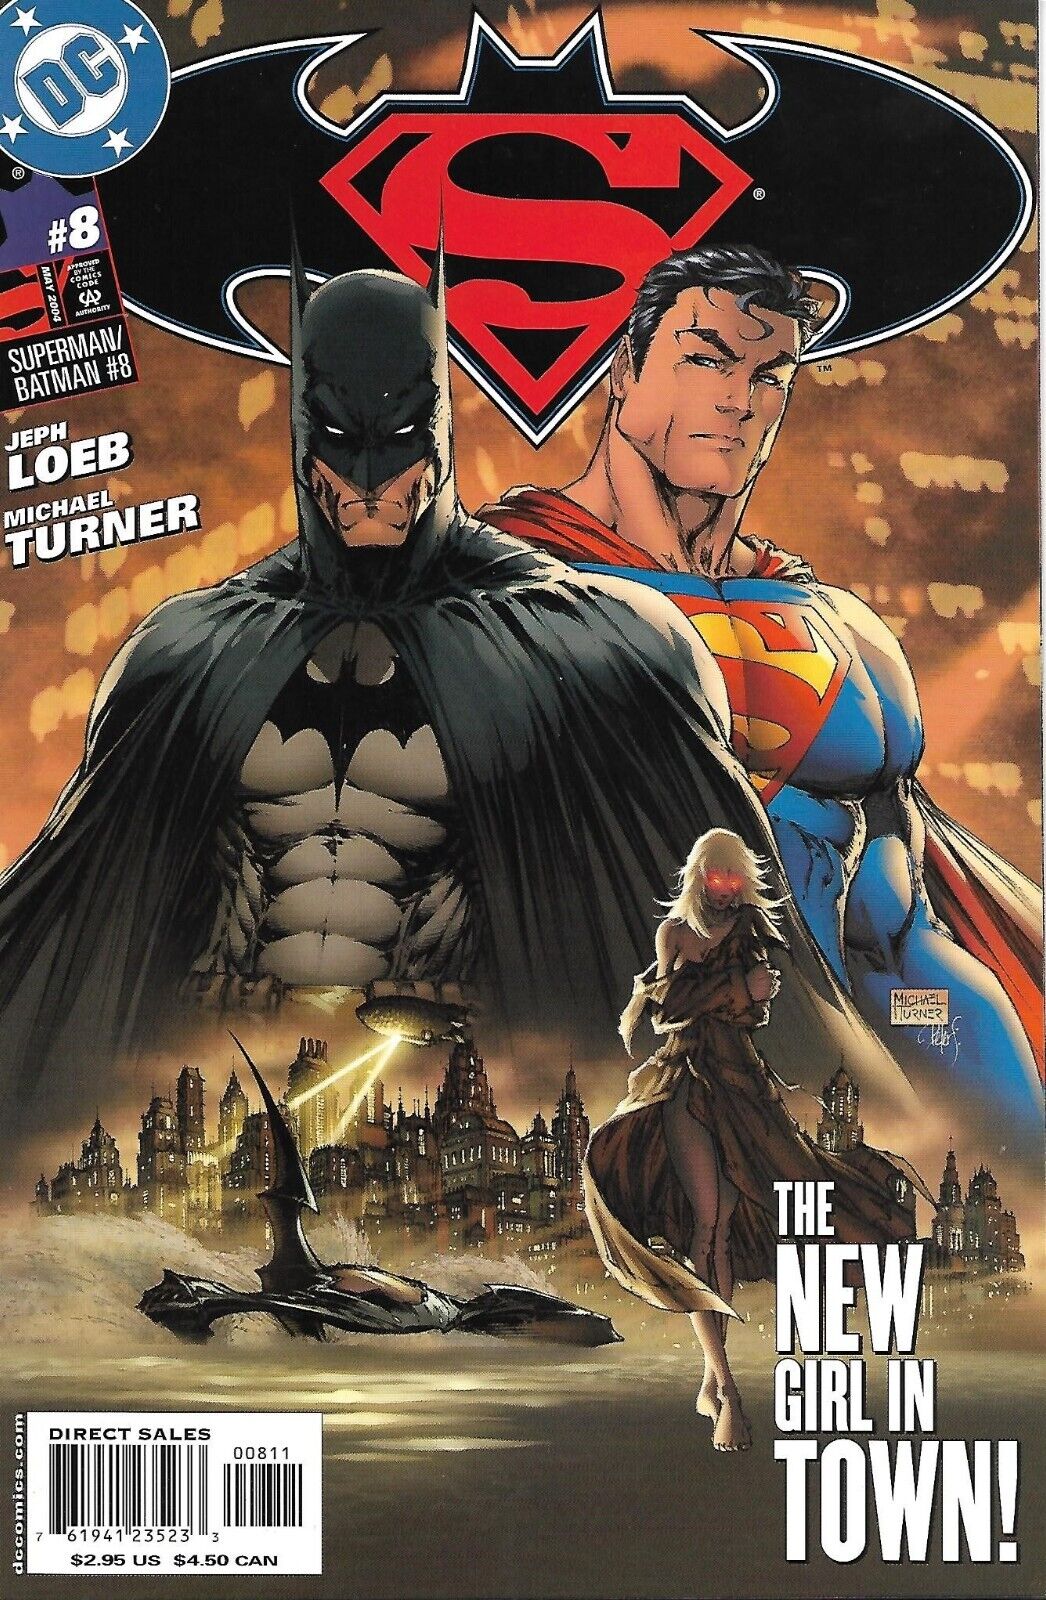 Superman/Batman #8 Artist: Michael Turner Writer: Jeff Loeb DC Comics 2004